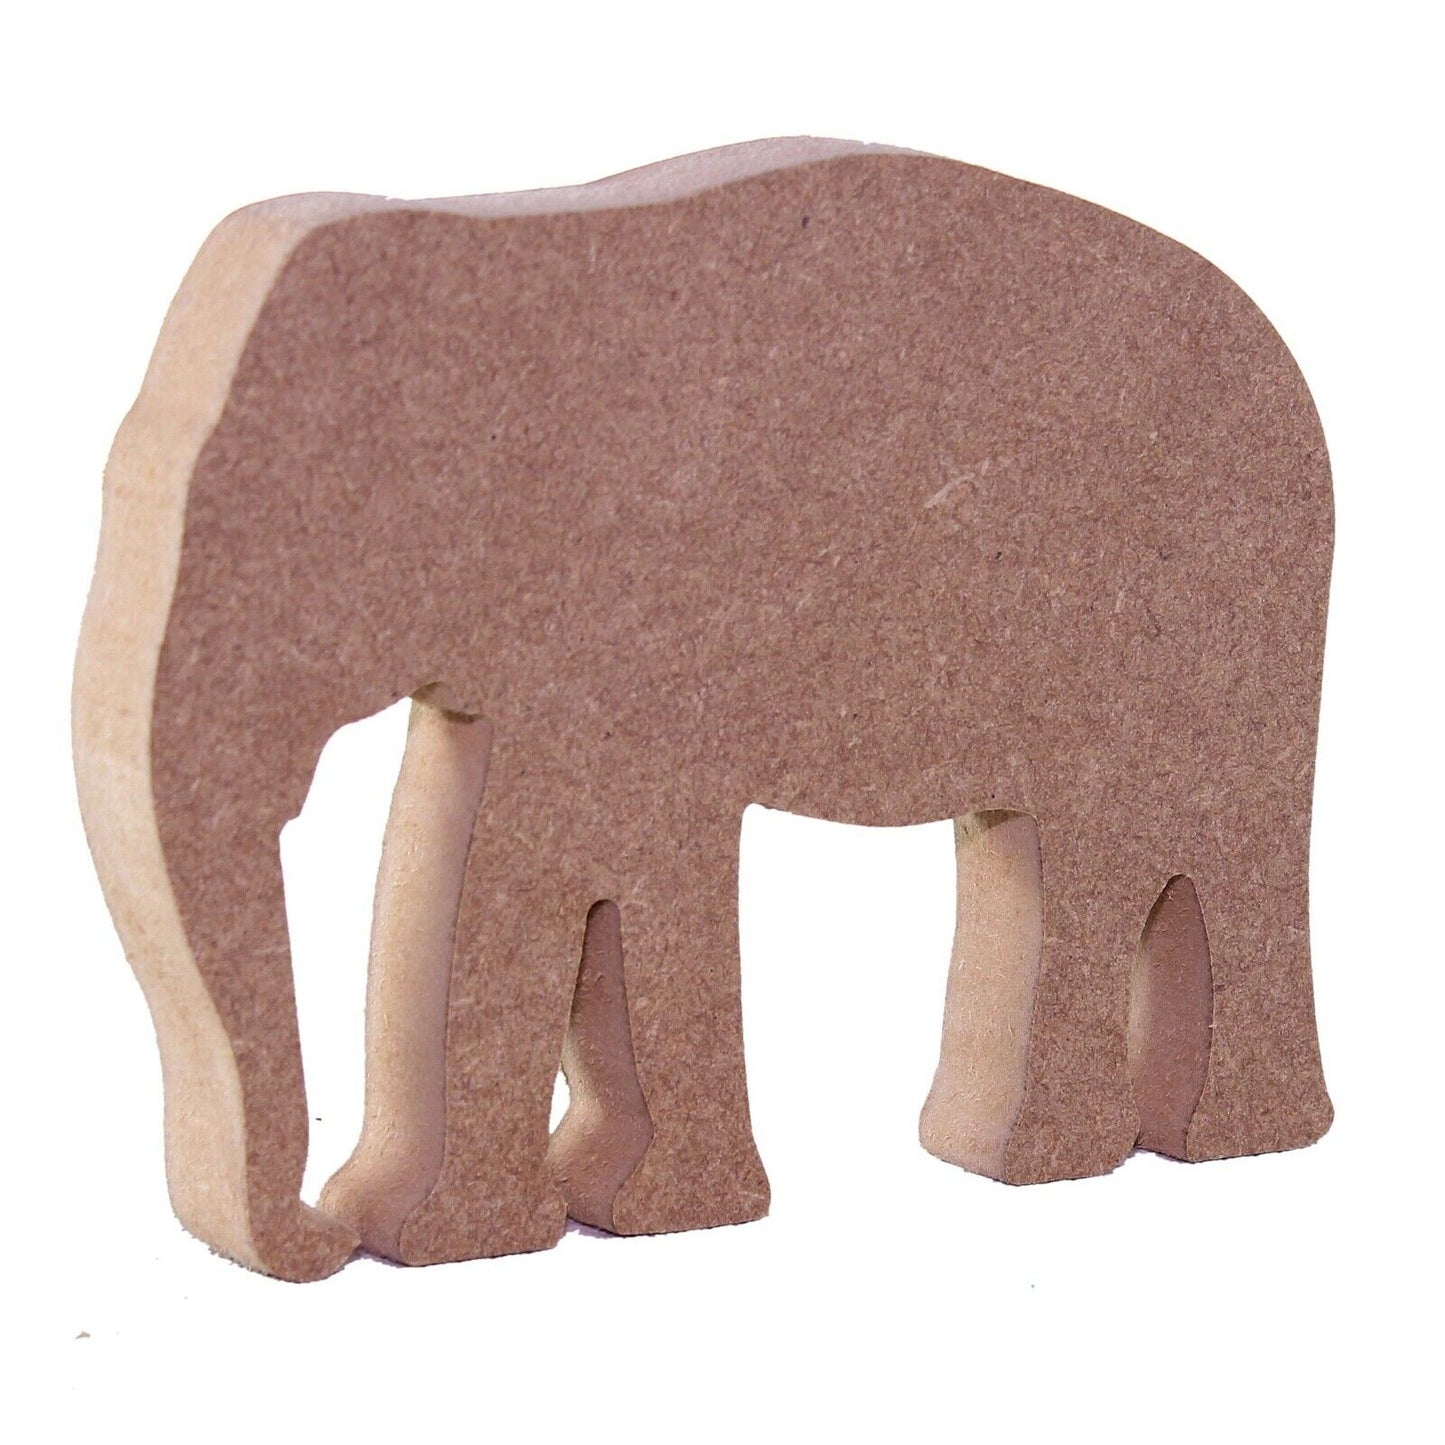 Free Standing 18mm MDF Elephant Craft Shape Various Sizes. Animal, Zoo, Safari